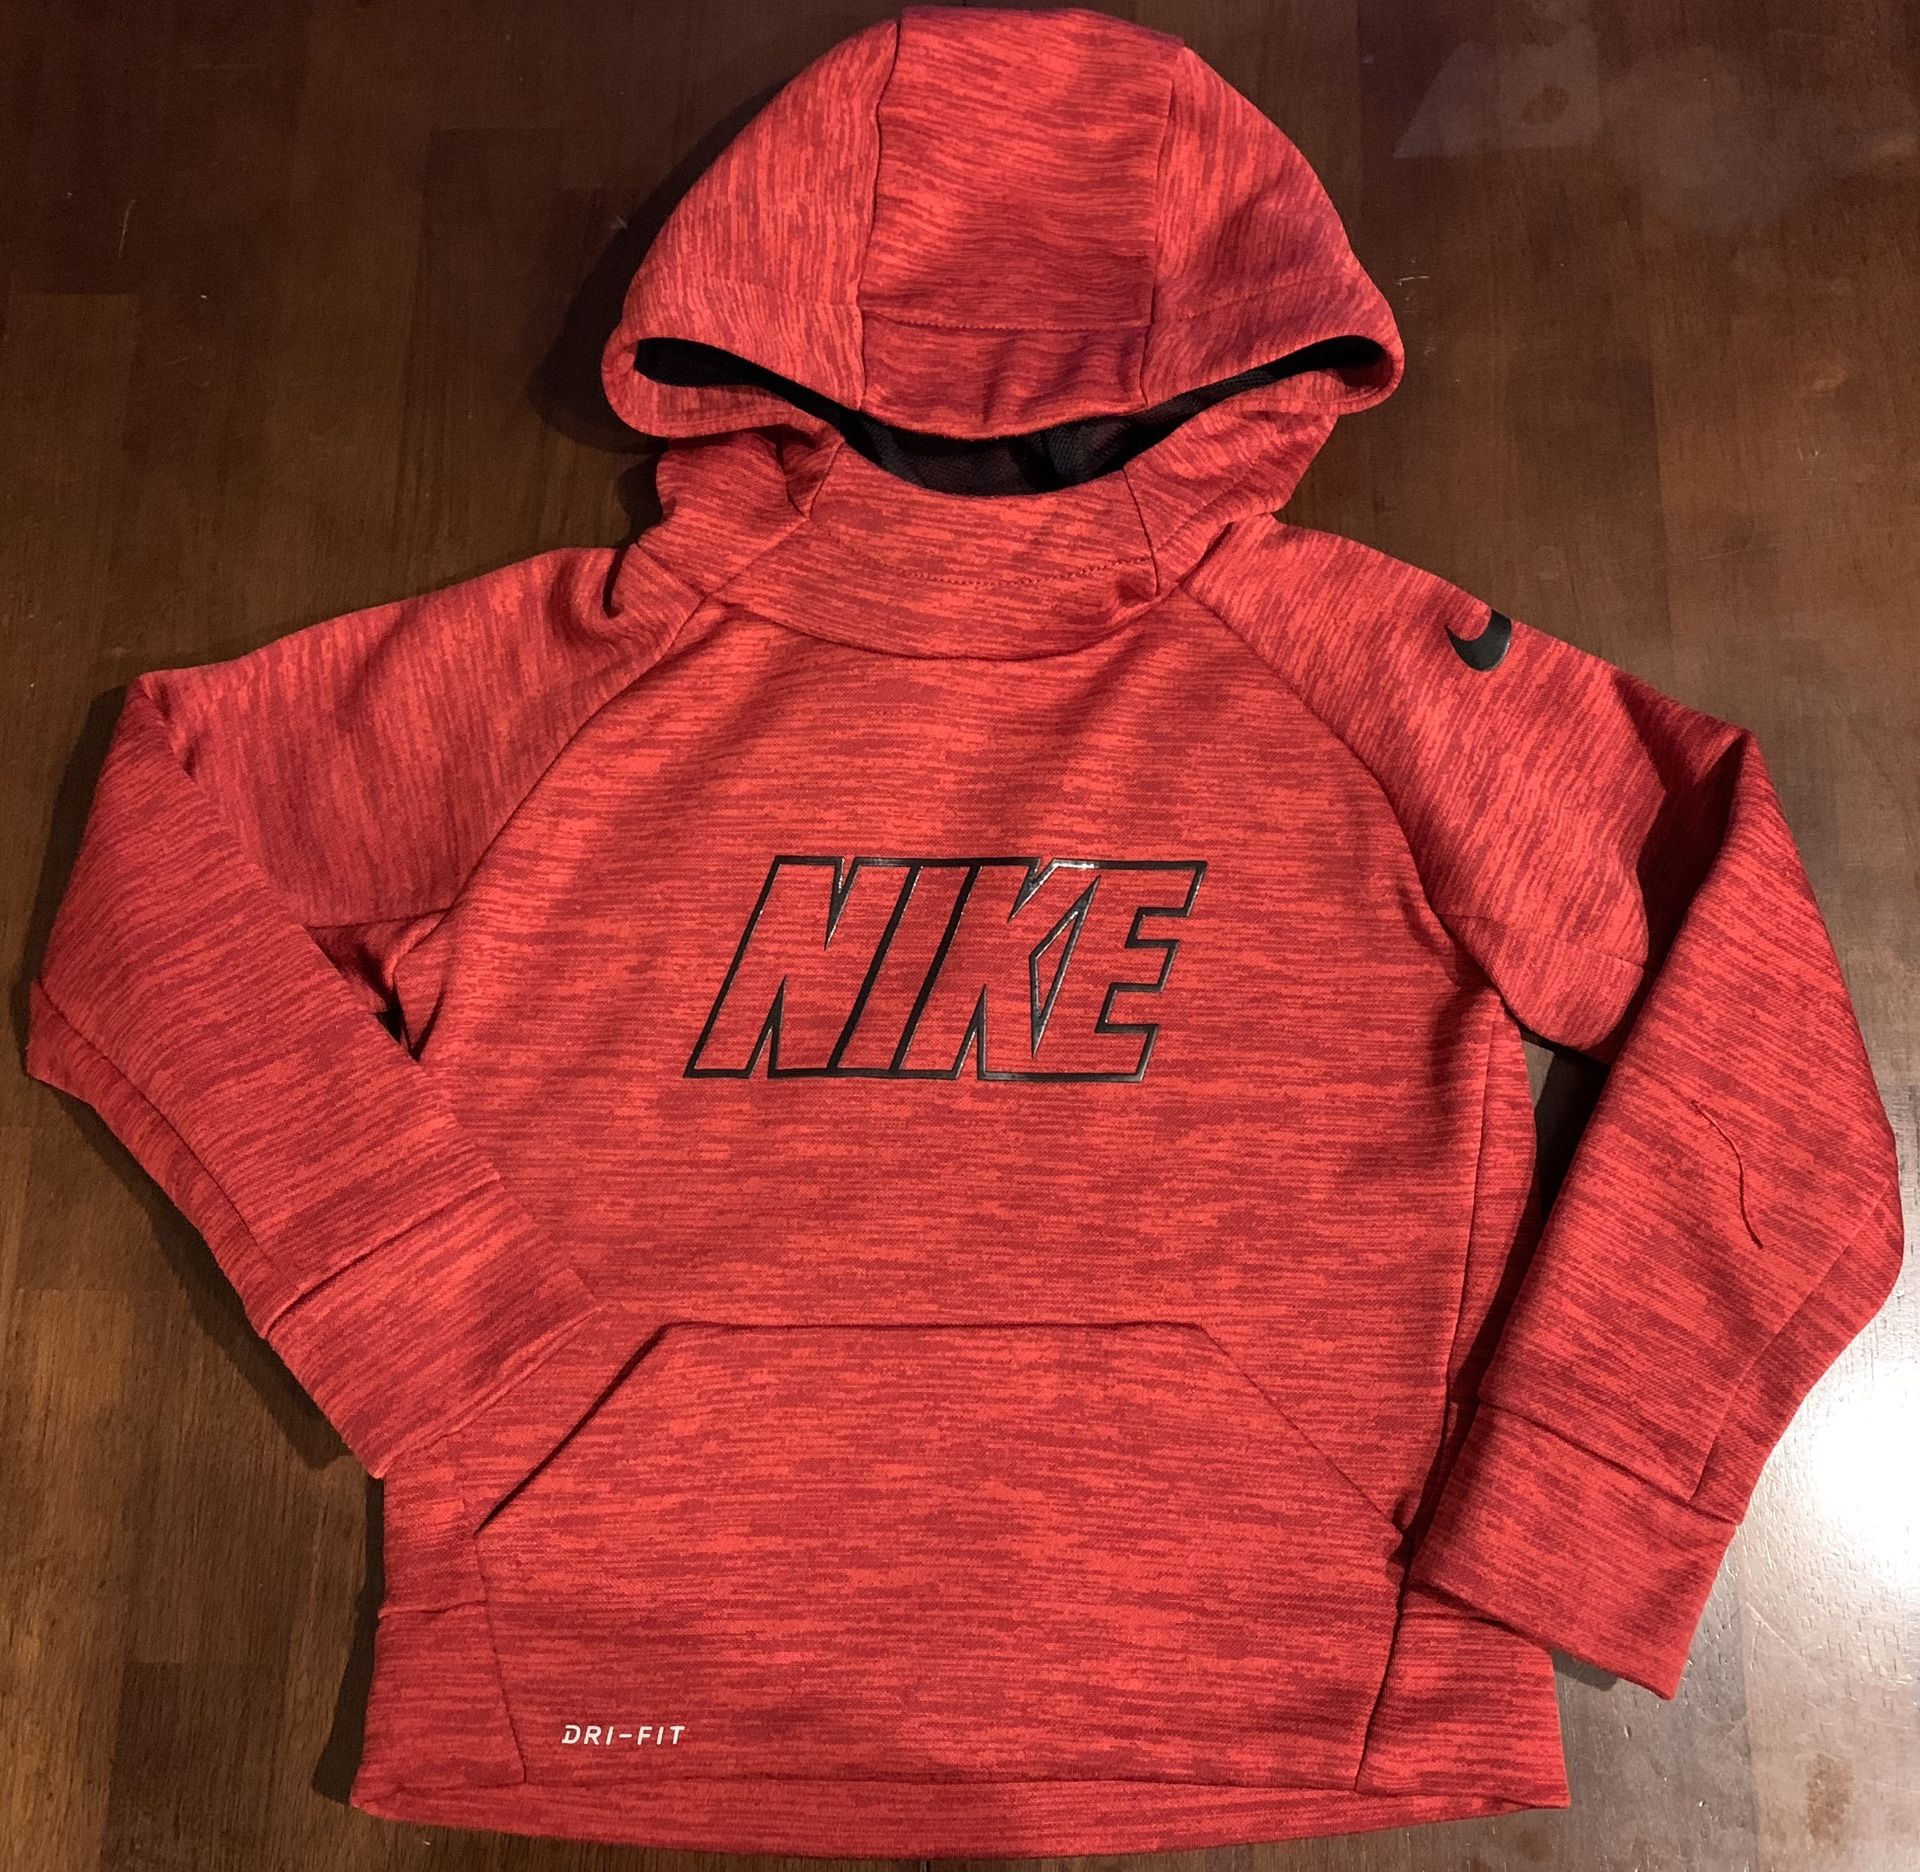 Nike boys sweatshirt - like new - size 4T